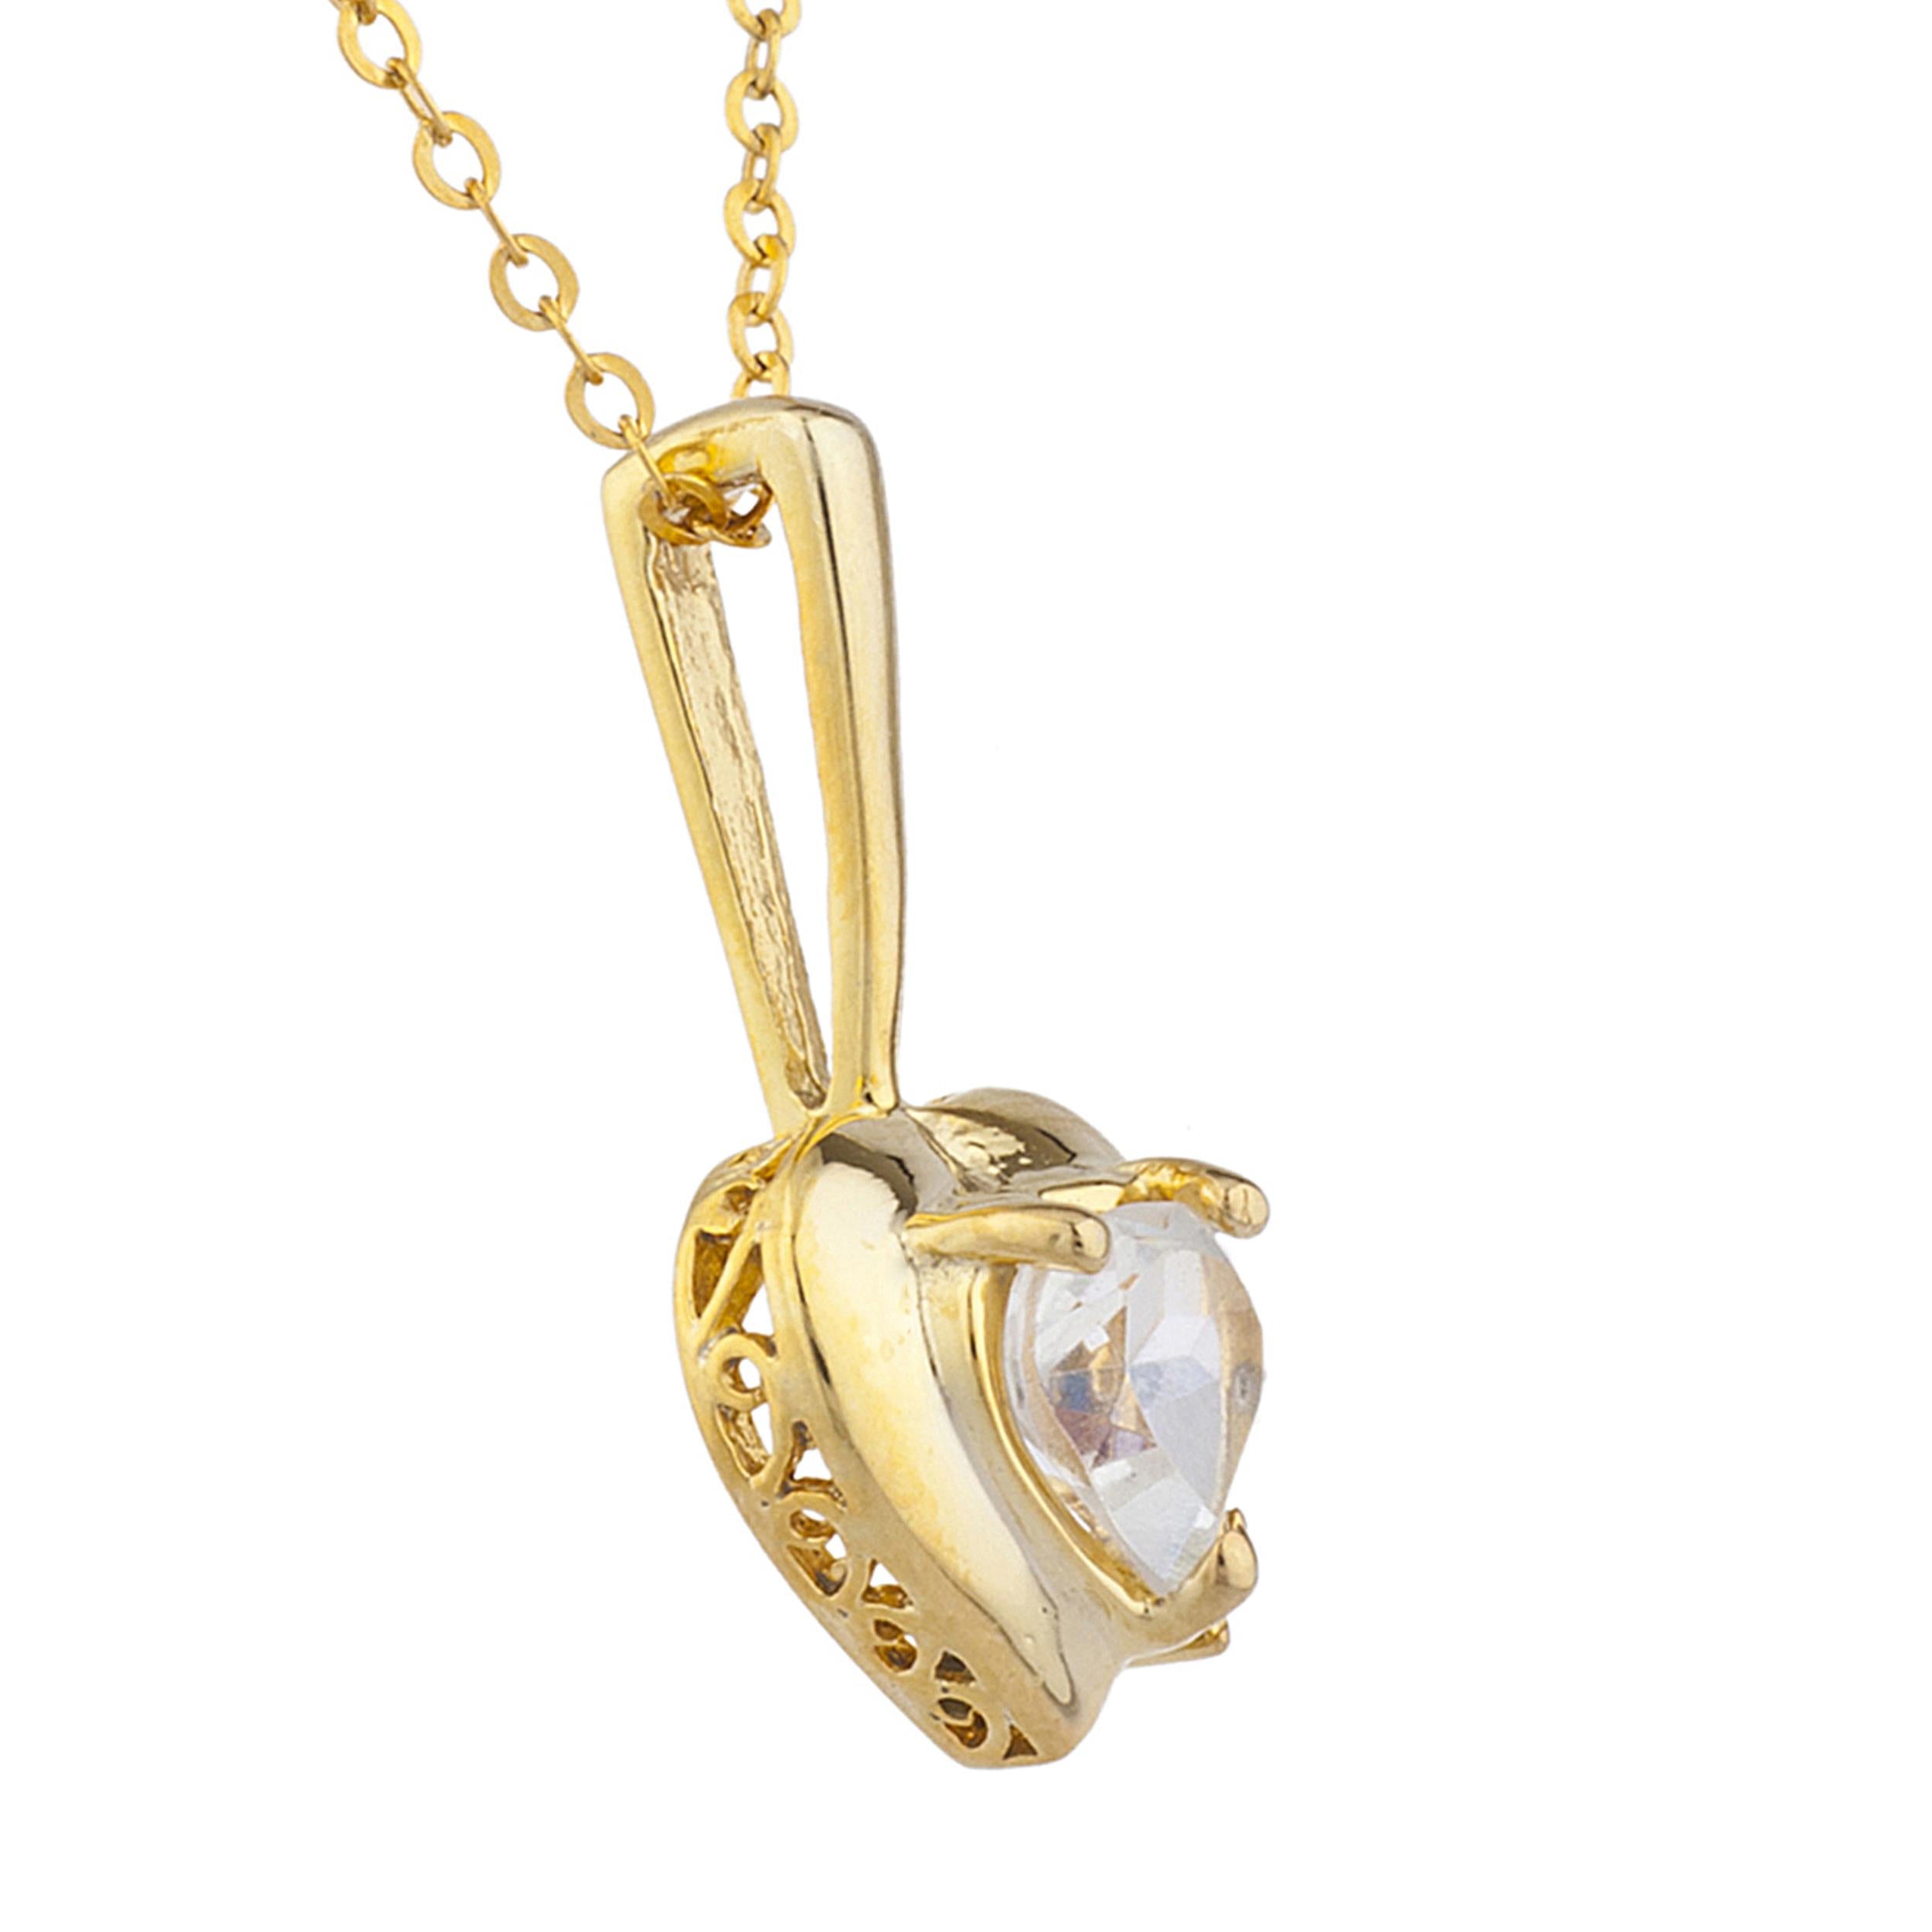 14Kt Gold White Sapphire & Diamond Heart Design Pendant Necklace